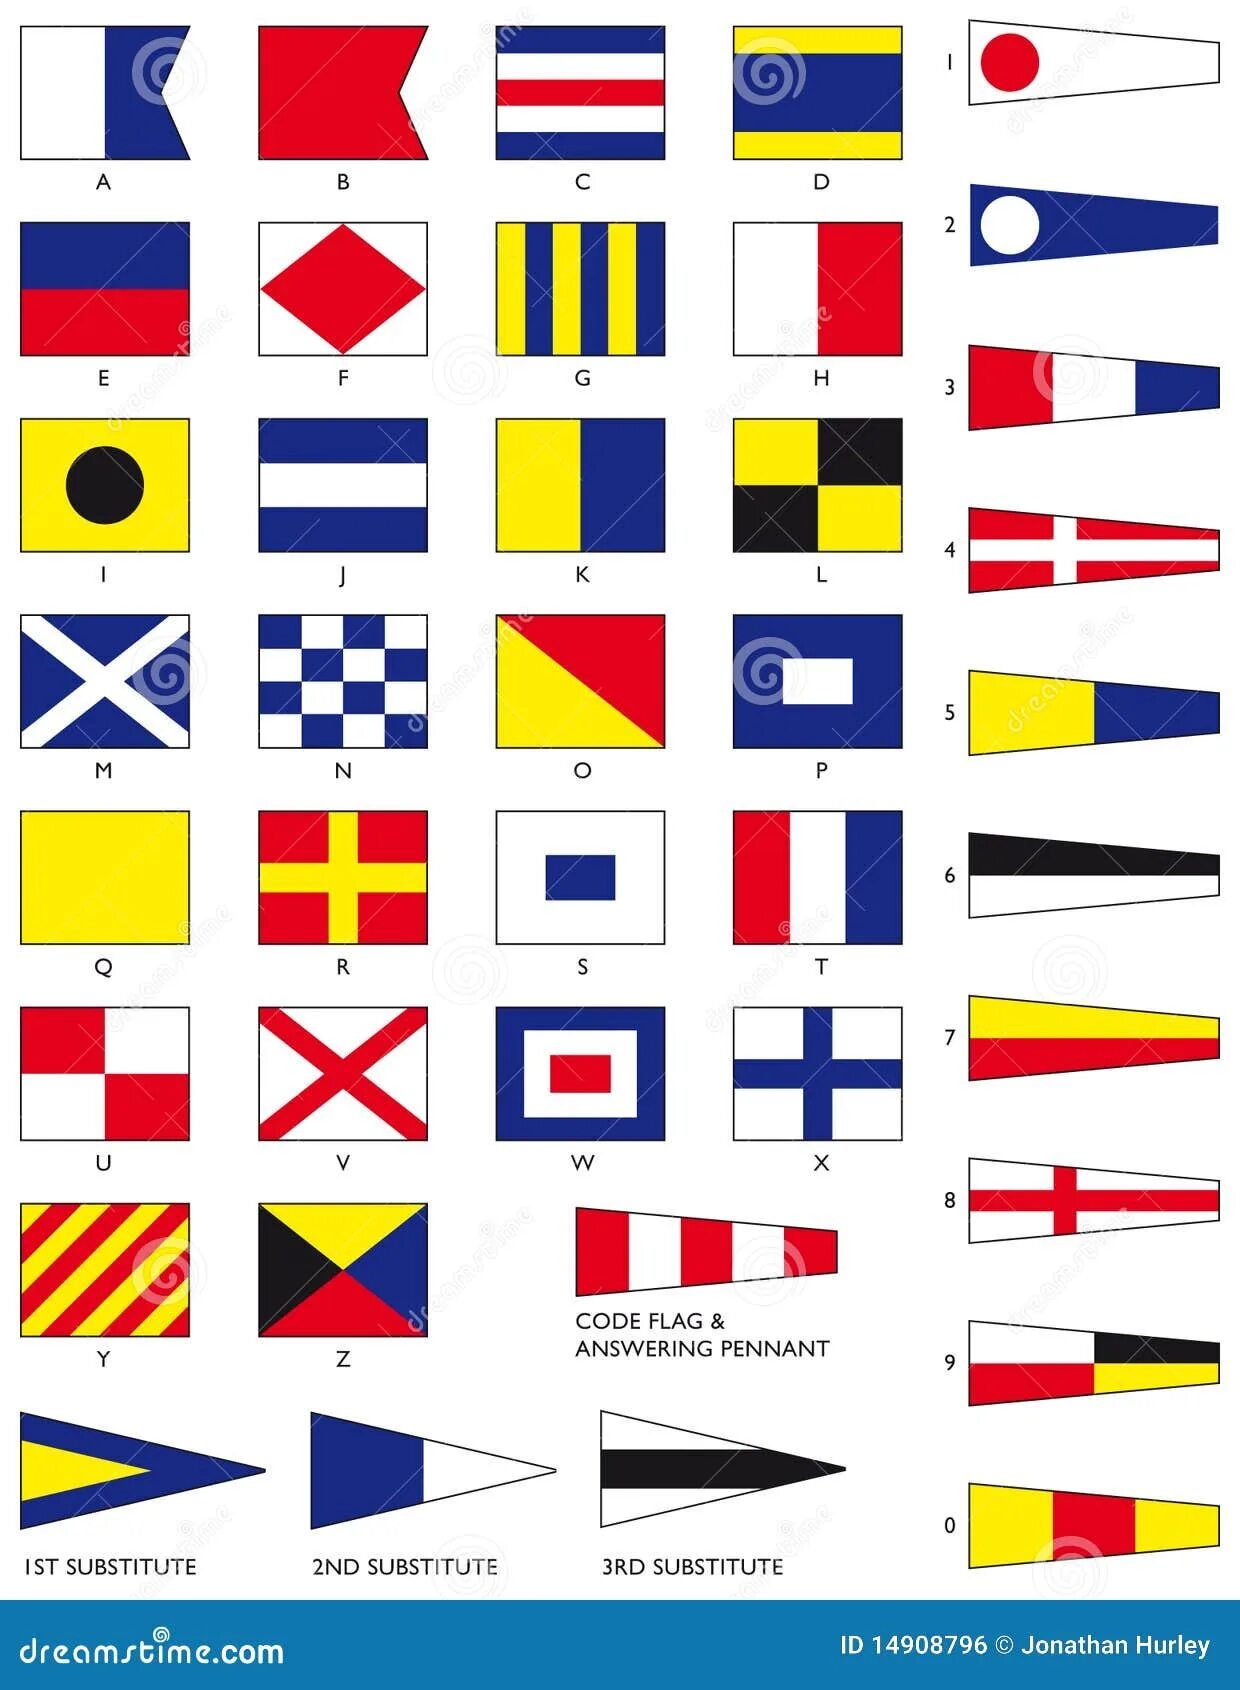 Свод сигналов флаги. МСС-65 Международный свод сигналов. Флаги Альфа Браво Чарли. Сигнальные флаги. Морские флаги.